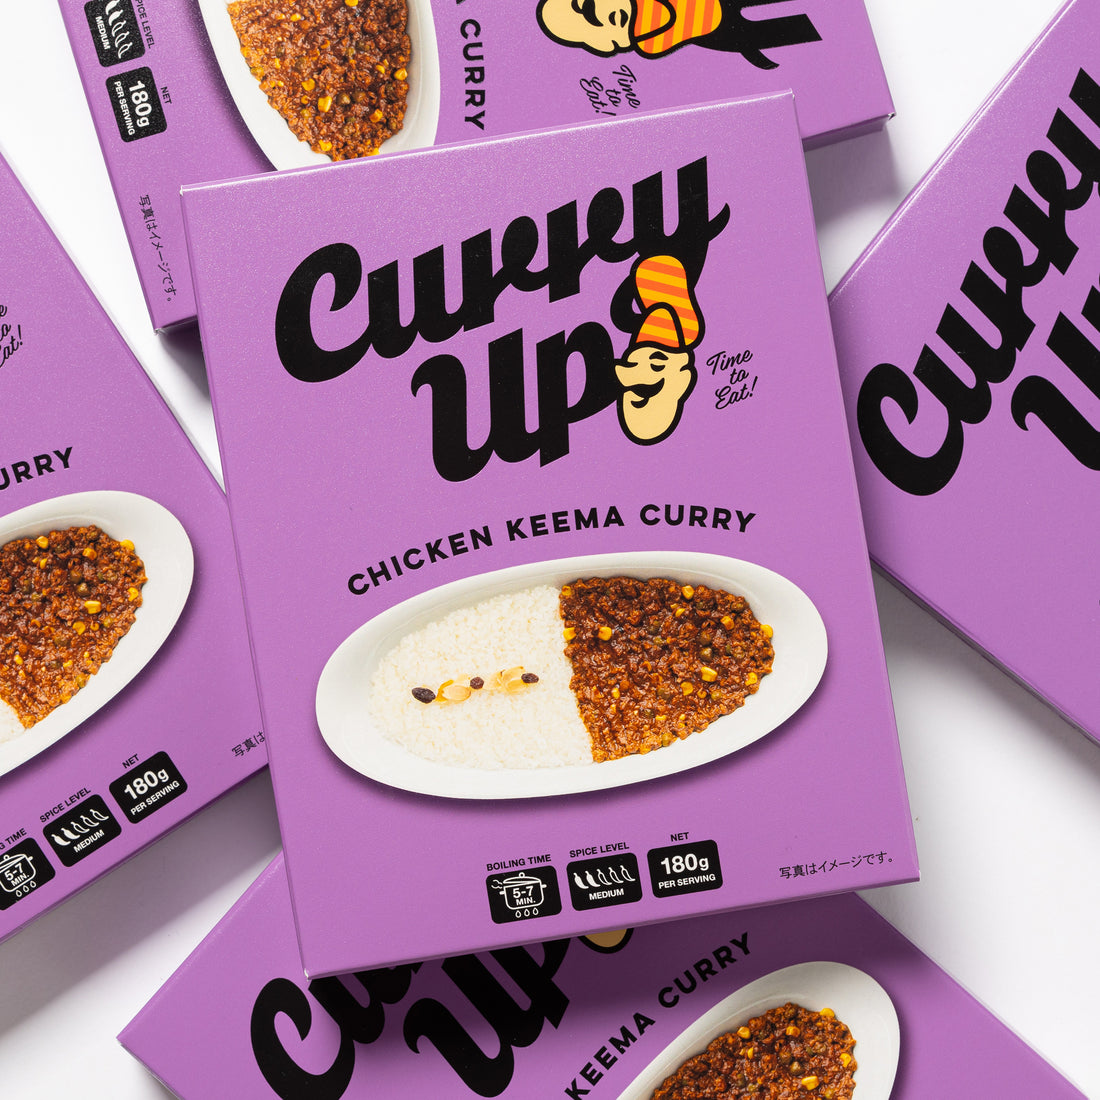 CURRY UPのレトルトカレー第2弾 「CURRY UP CHICKEN KEEMA CURRY」発売のお知らせ